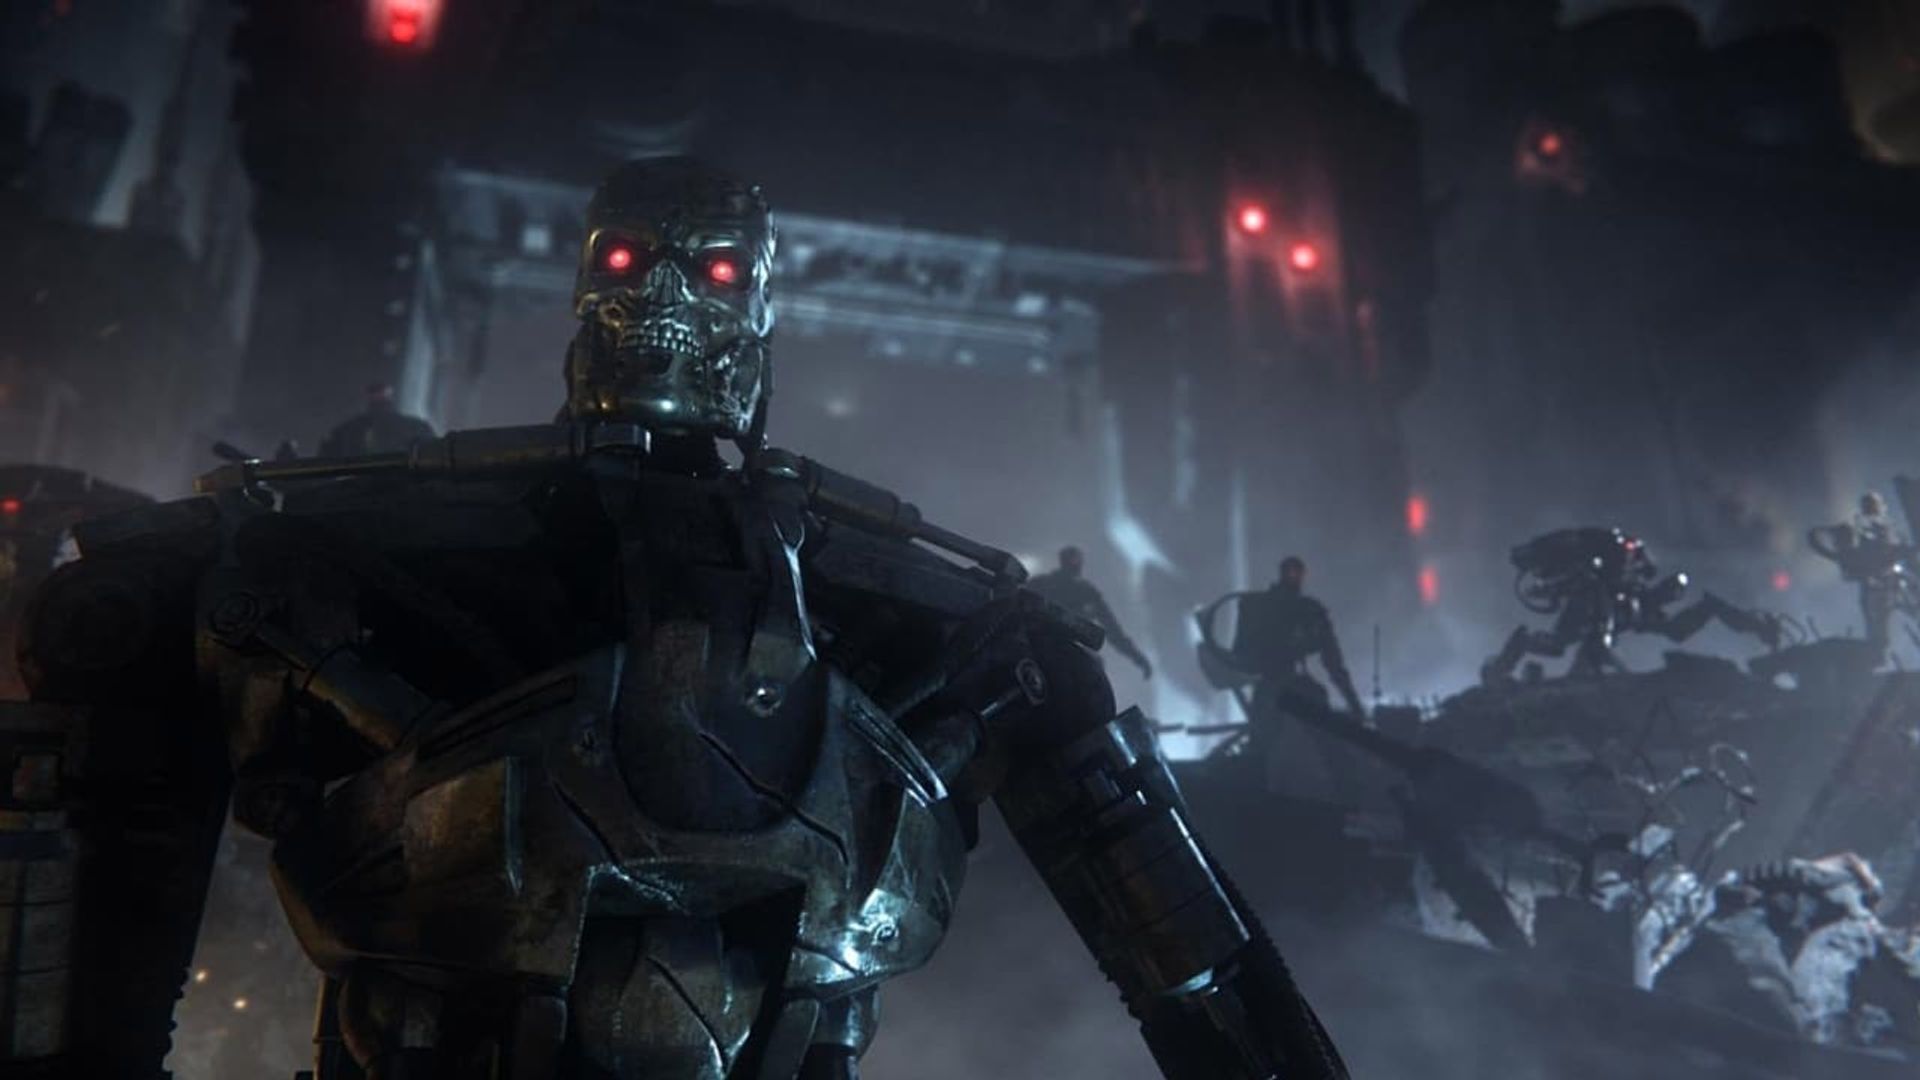 Terminator Salvation: The Machinima Series background